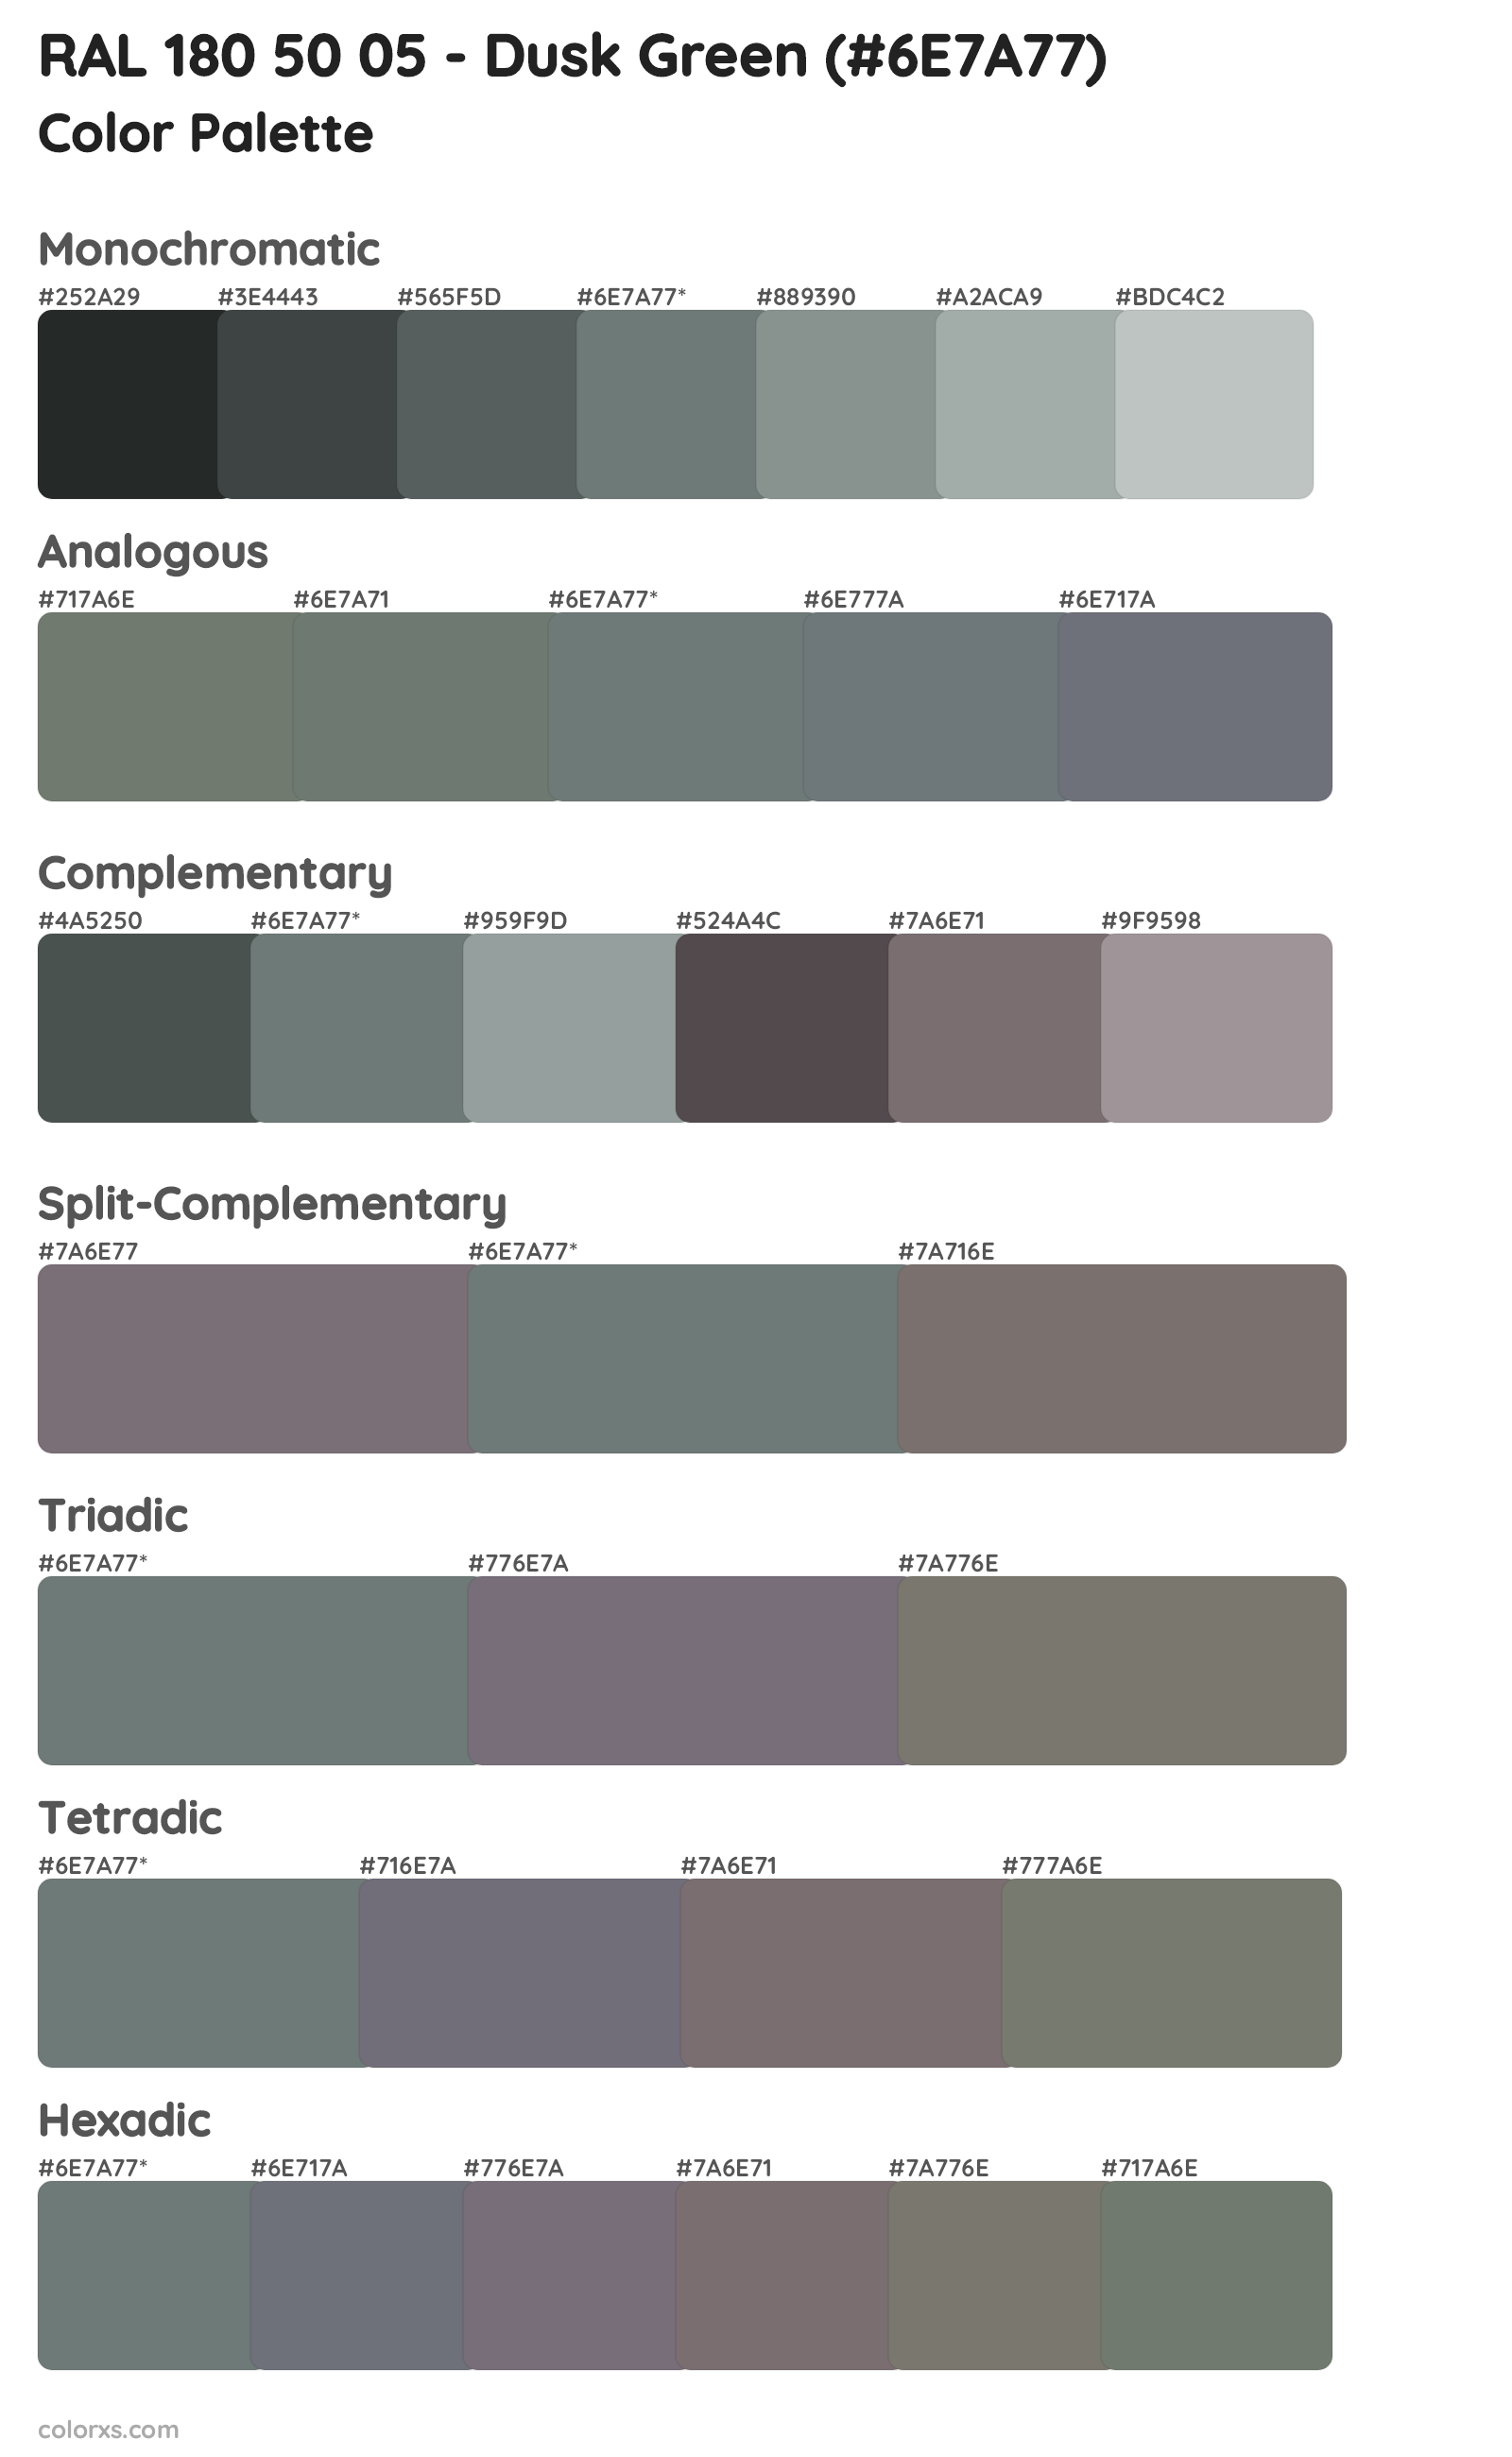 RAL 180 50 05 - Dusk Green Color Scheme Palettes